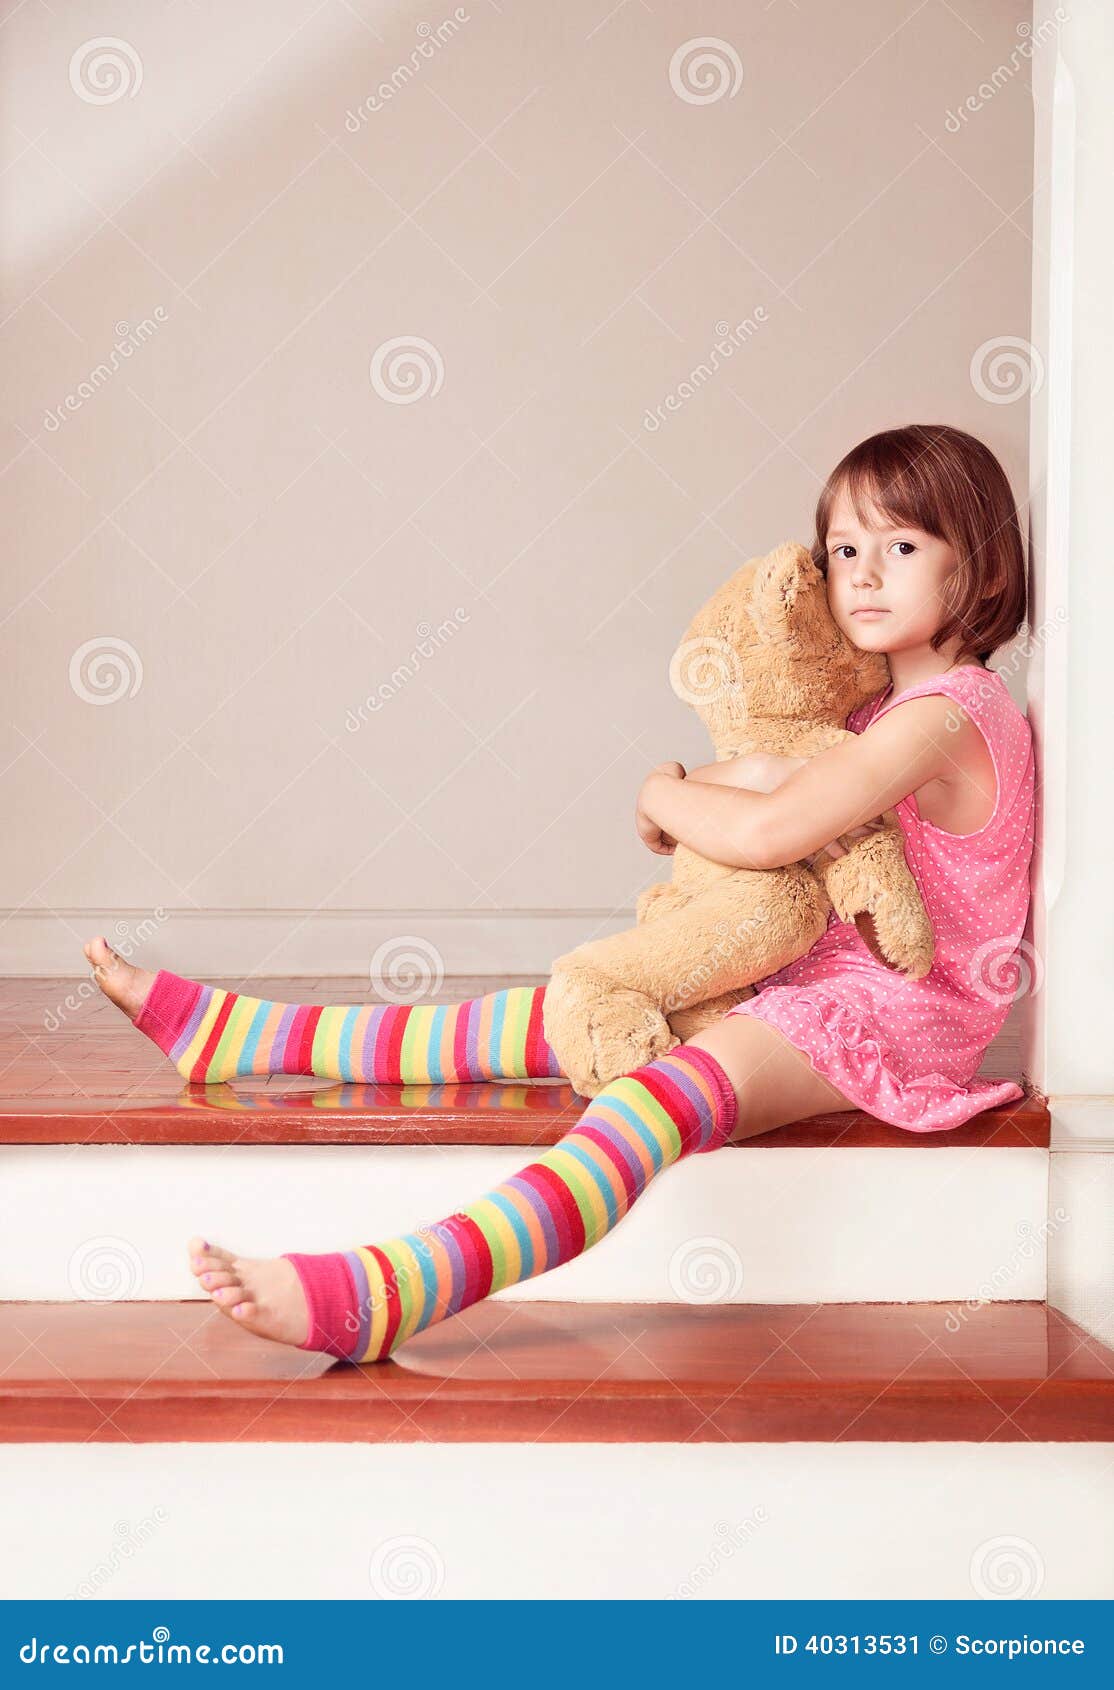 Teenage girl wearing socks - Stock Image - C035/2881 - Science